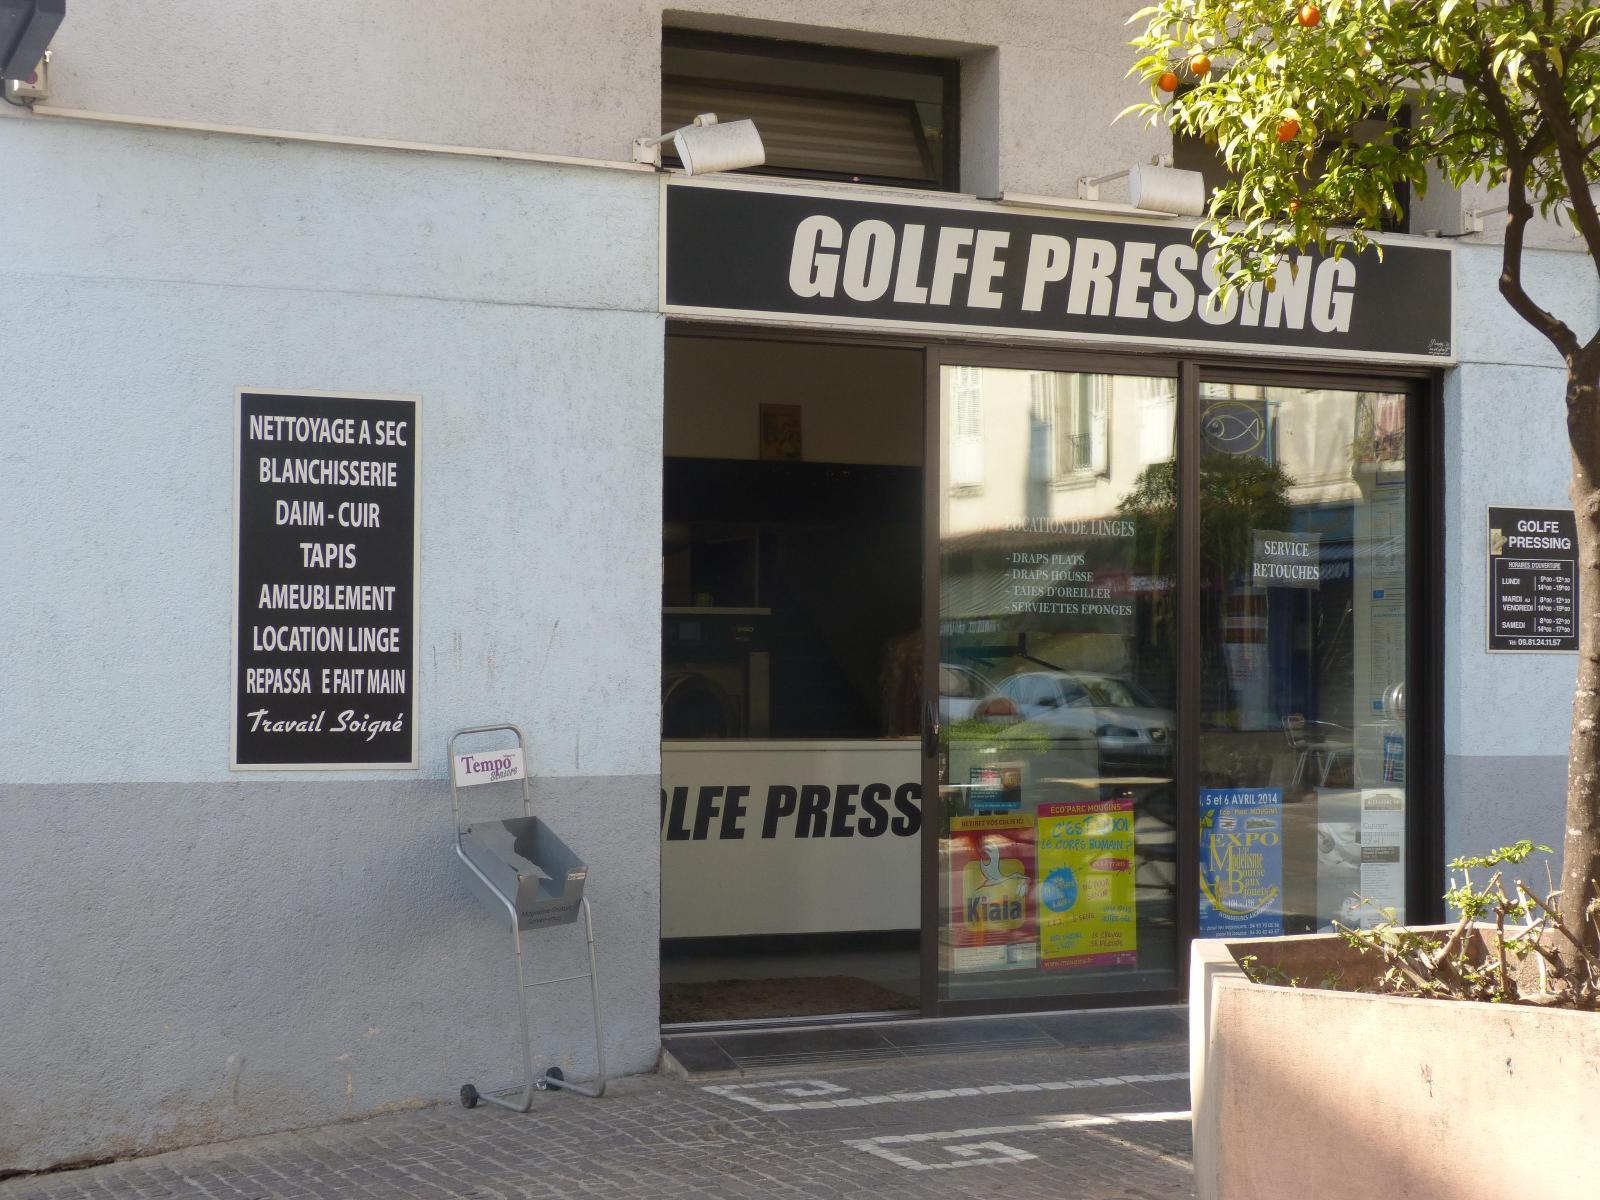 Golfe Pressing